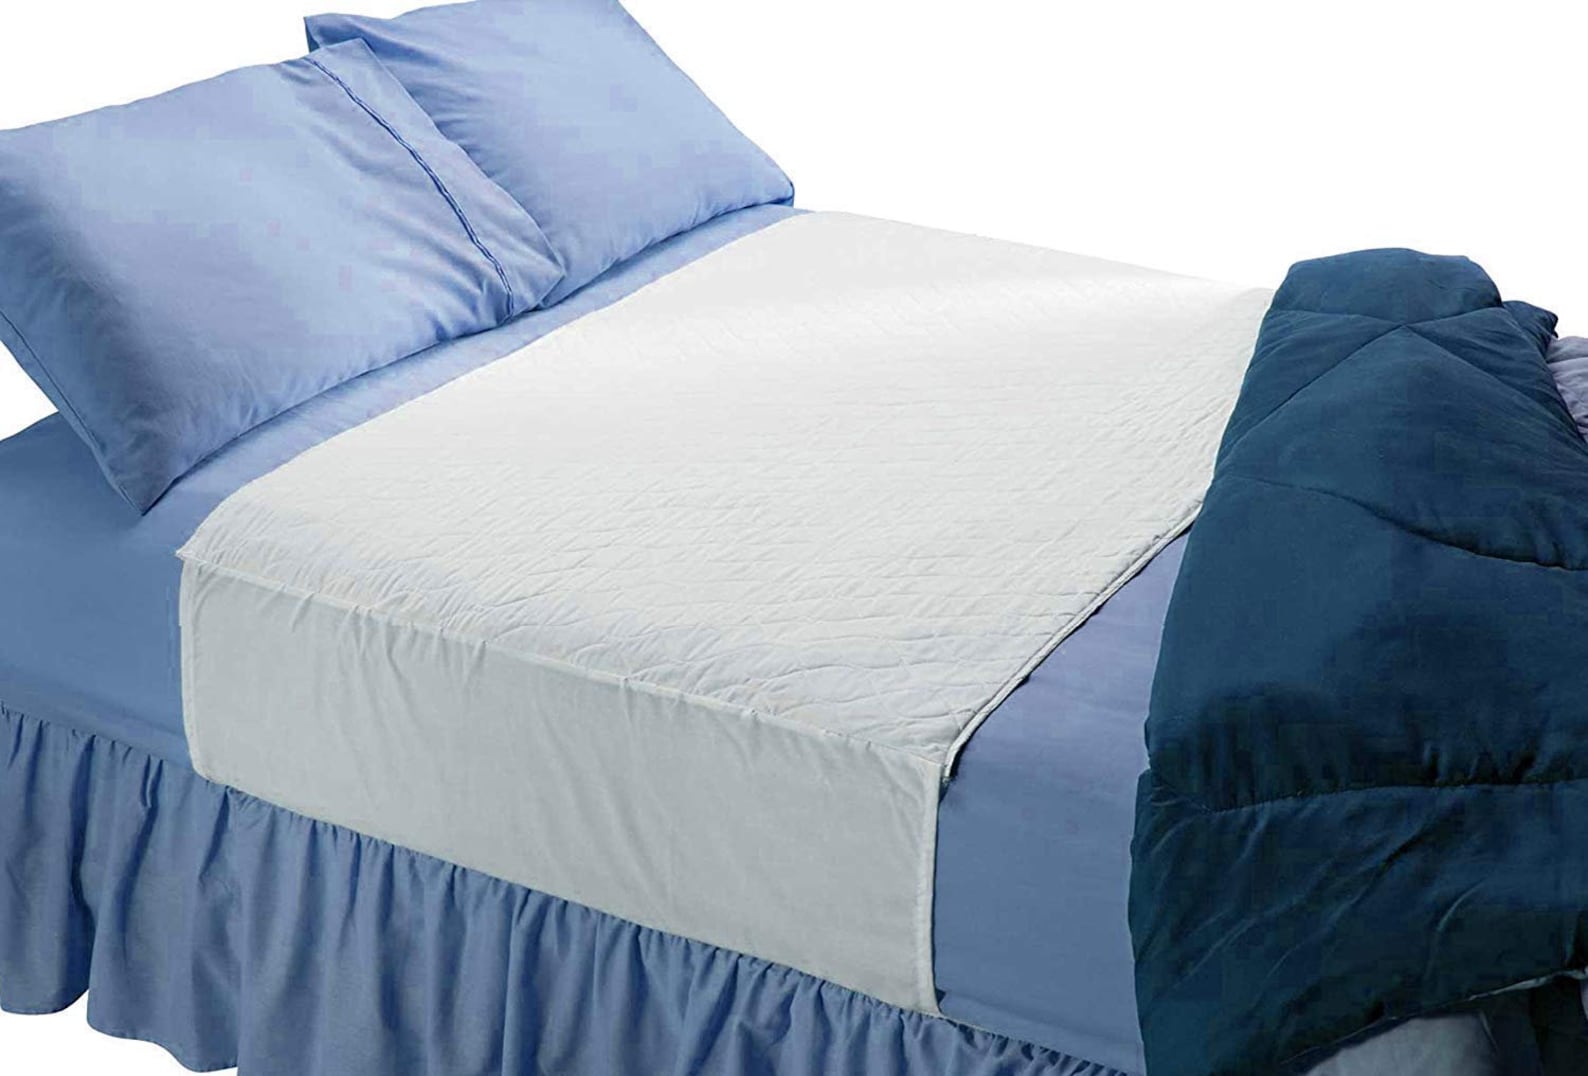 waterproof mattress pad vs sheet protector